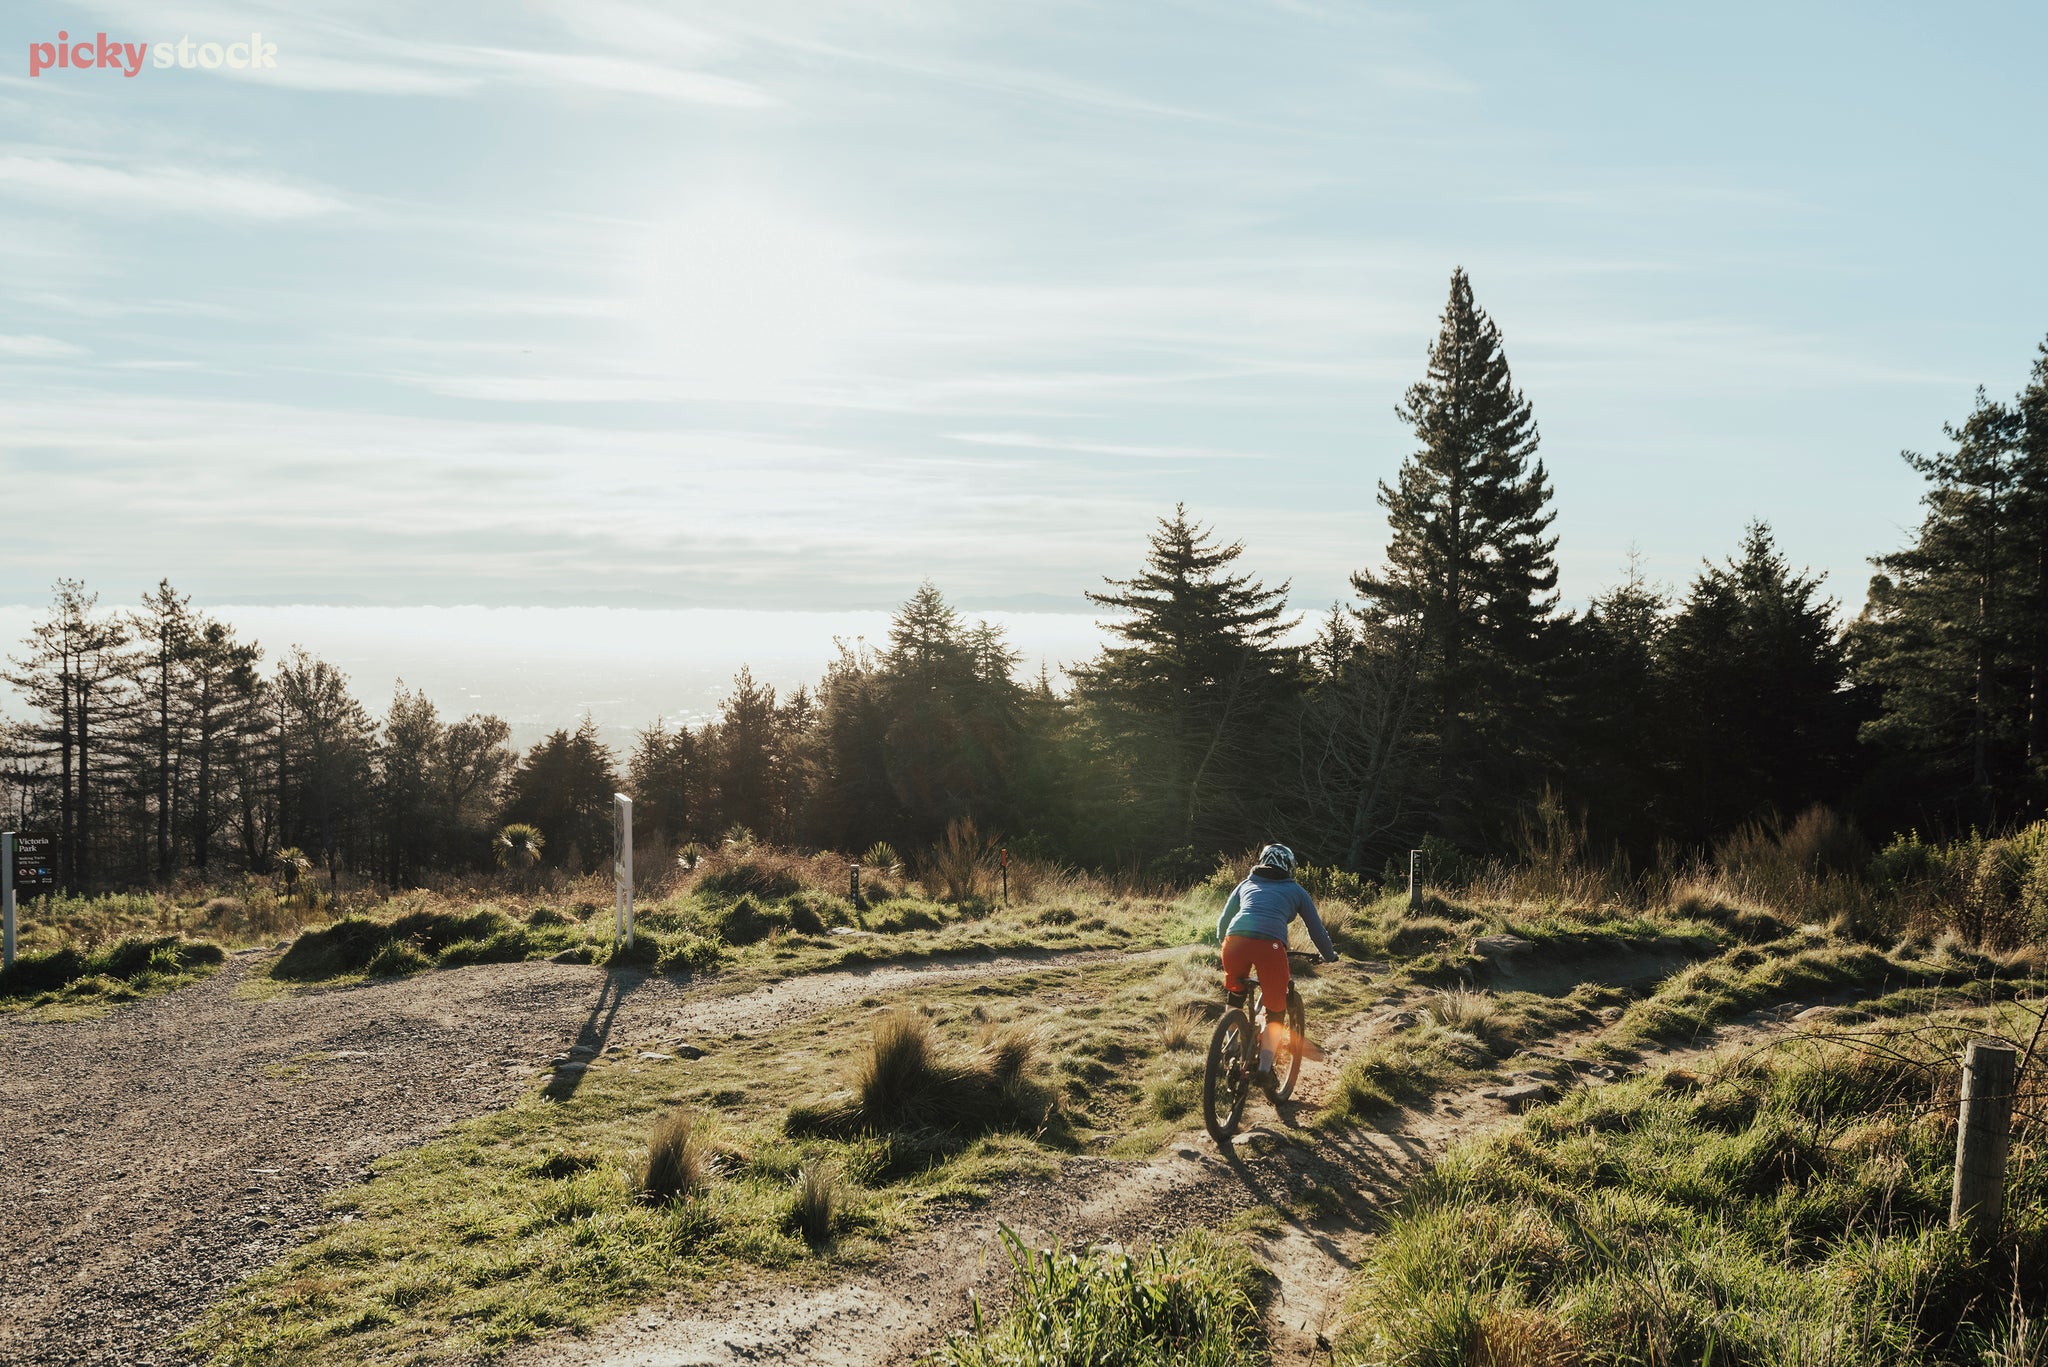 Mountain biker rides along a dirt trail on a scrub hillside towards a pine forest on a blue sky day. 